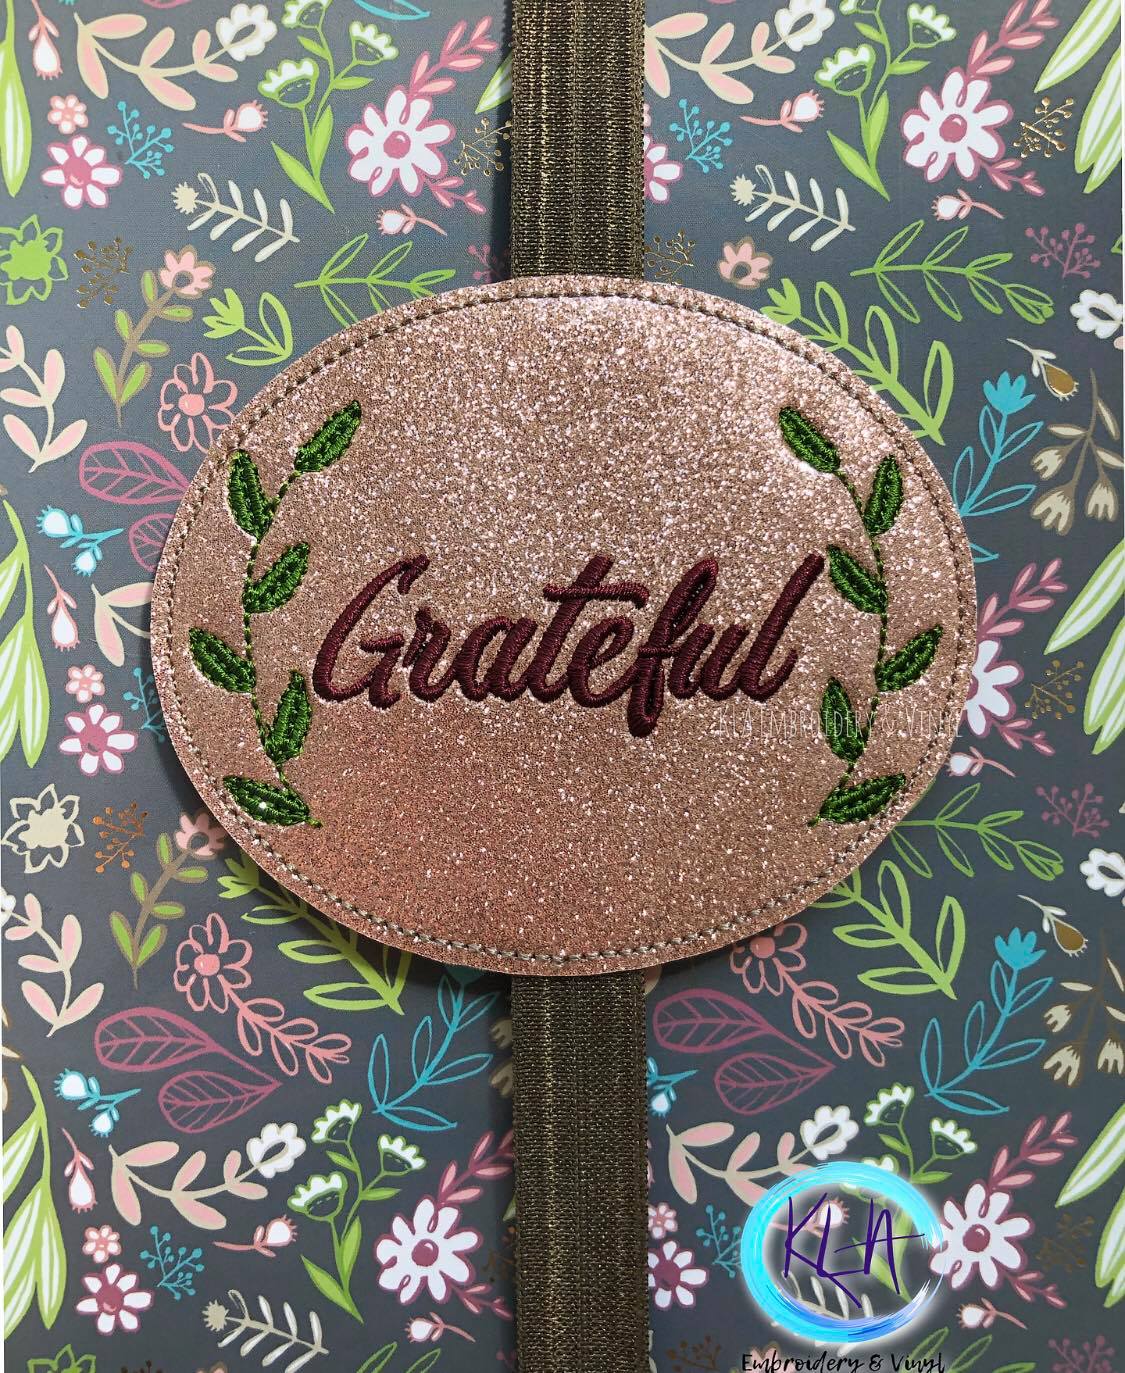 Grateful Book Band - Digital Embroidery Design